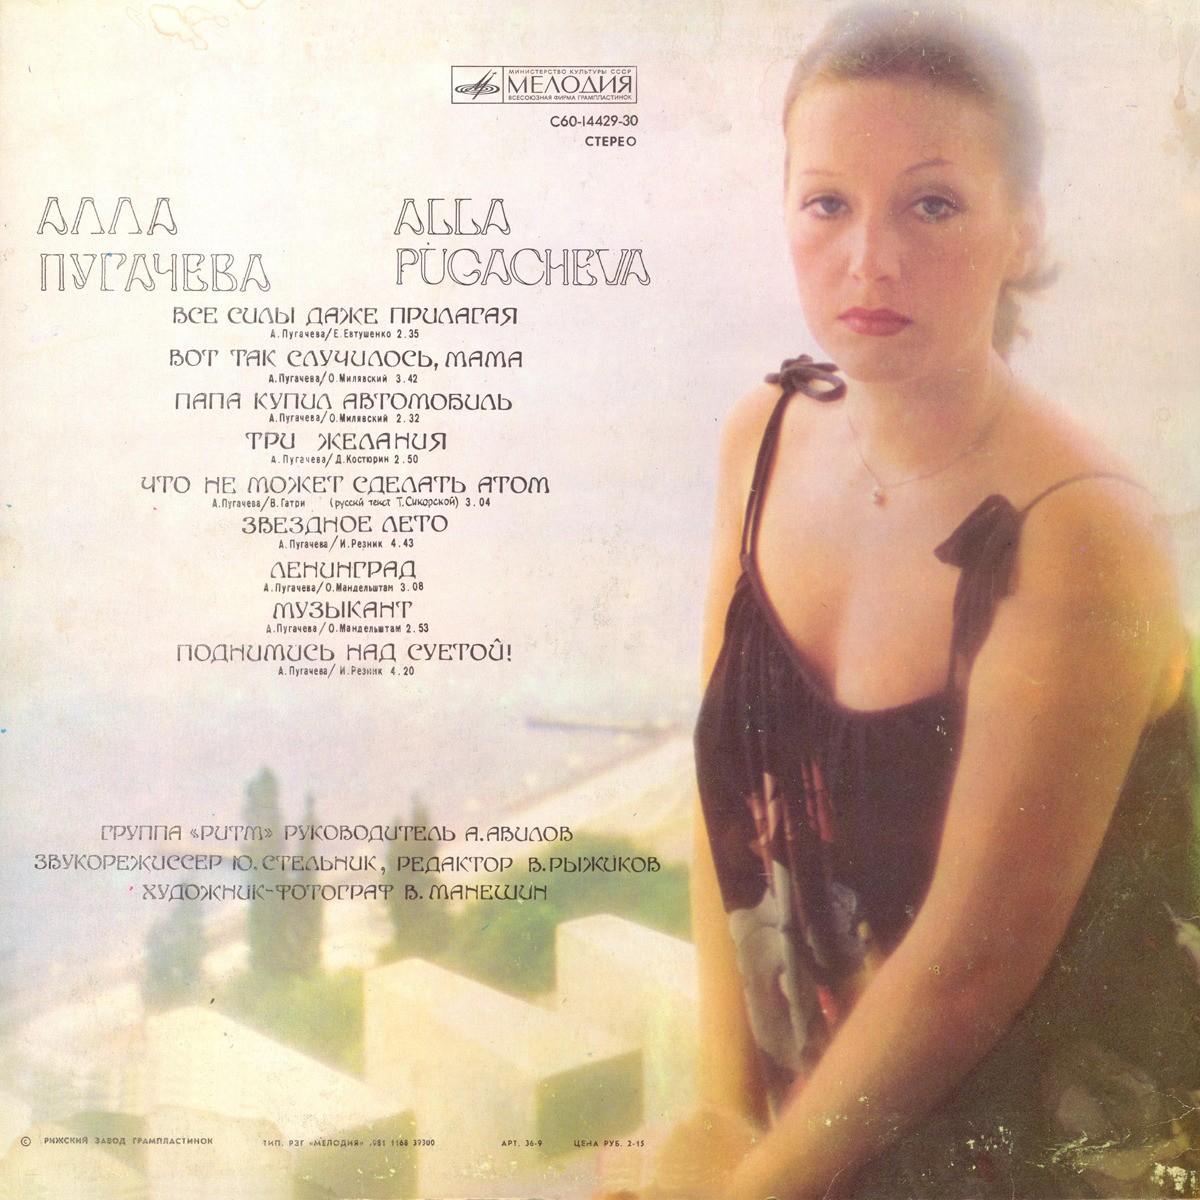 Alla Pugacheva, album "Rise above the fuss!"